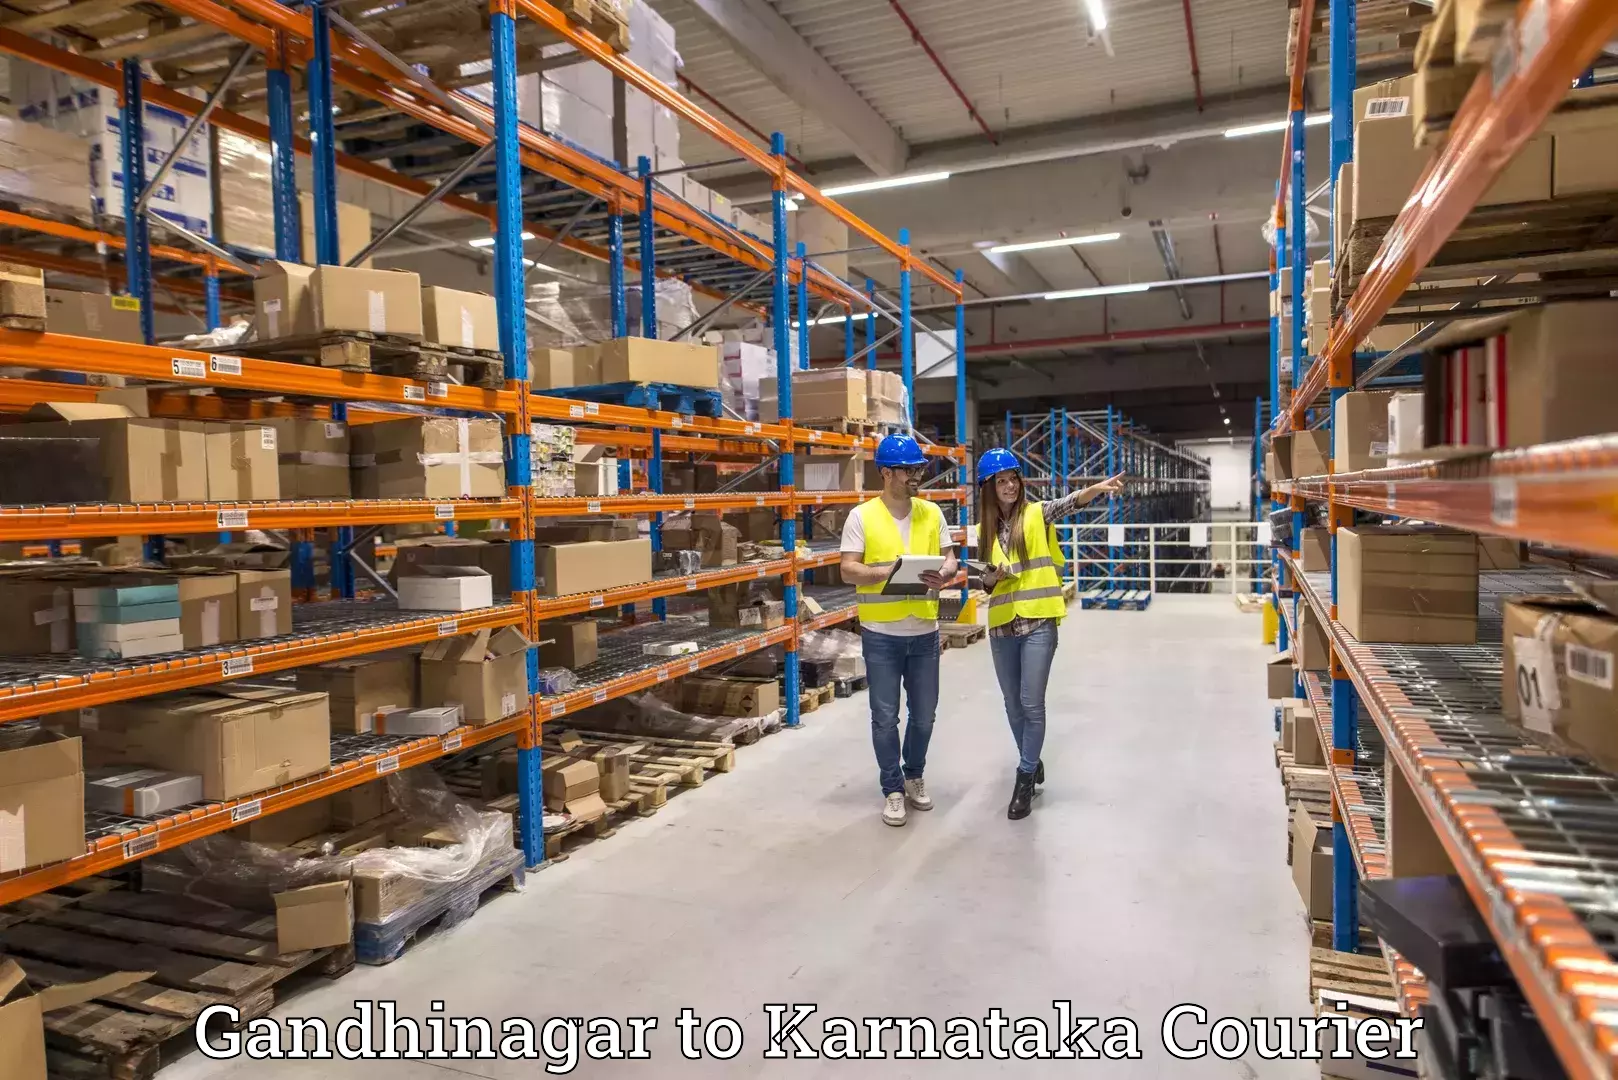 Global courier networks Gandhinagar to Mangalore